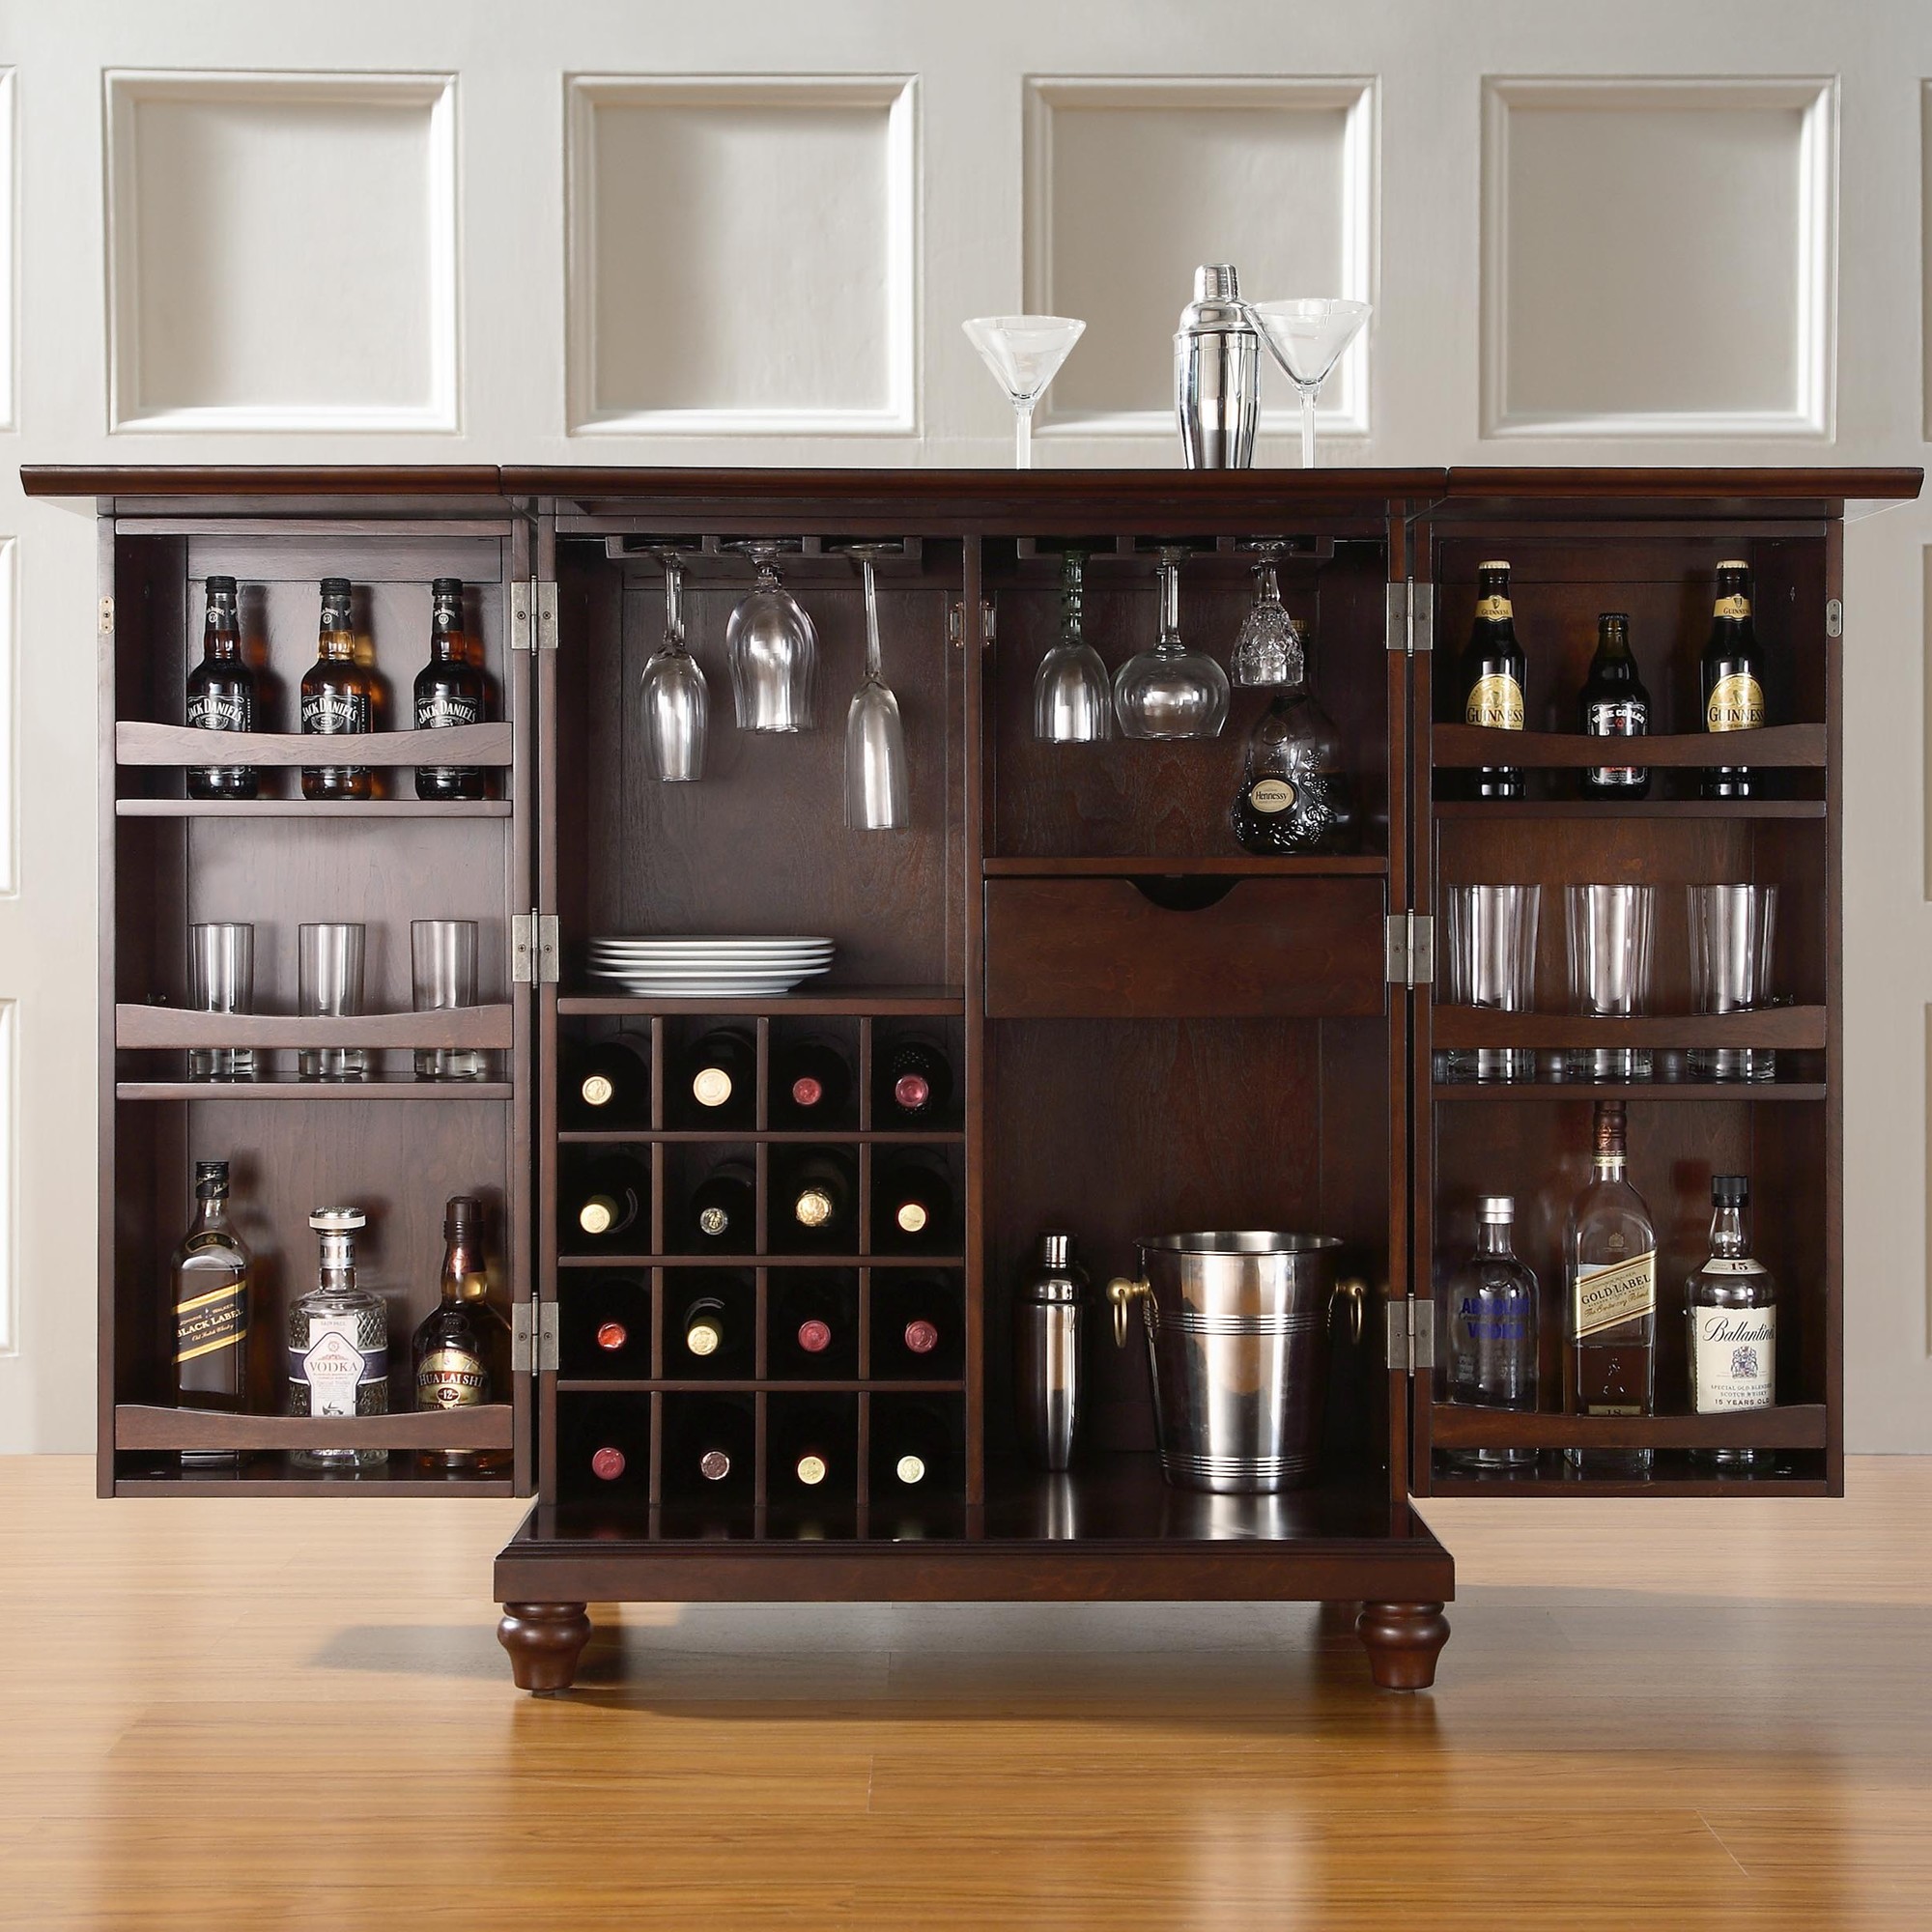 Creative Diy Home Bar Ideas With Wine Cellar Inside The Cabinet